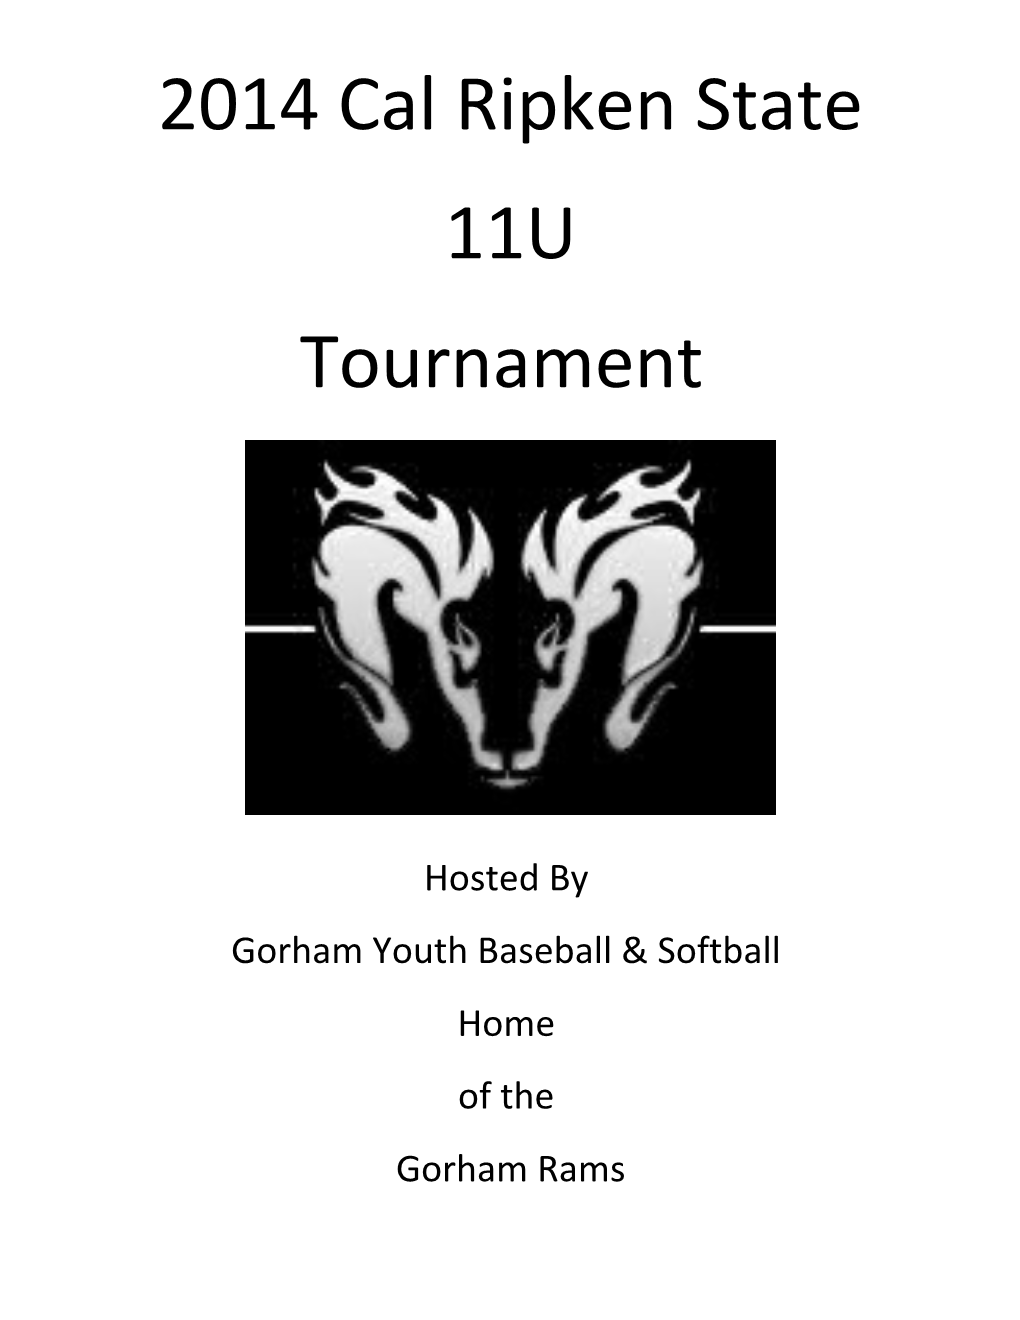 Gorham Youth Baseball & Softball